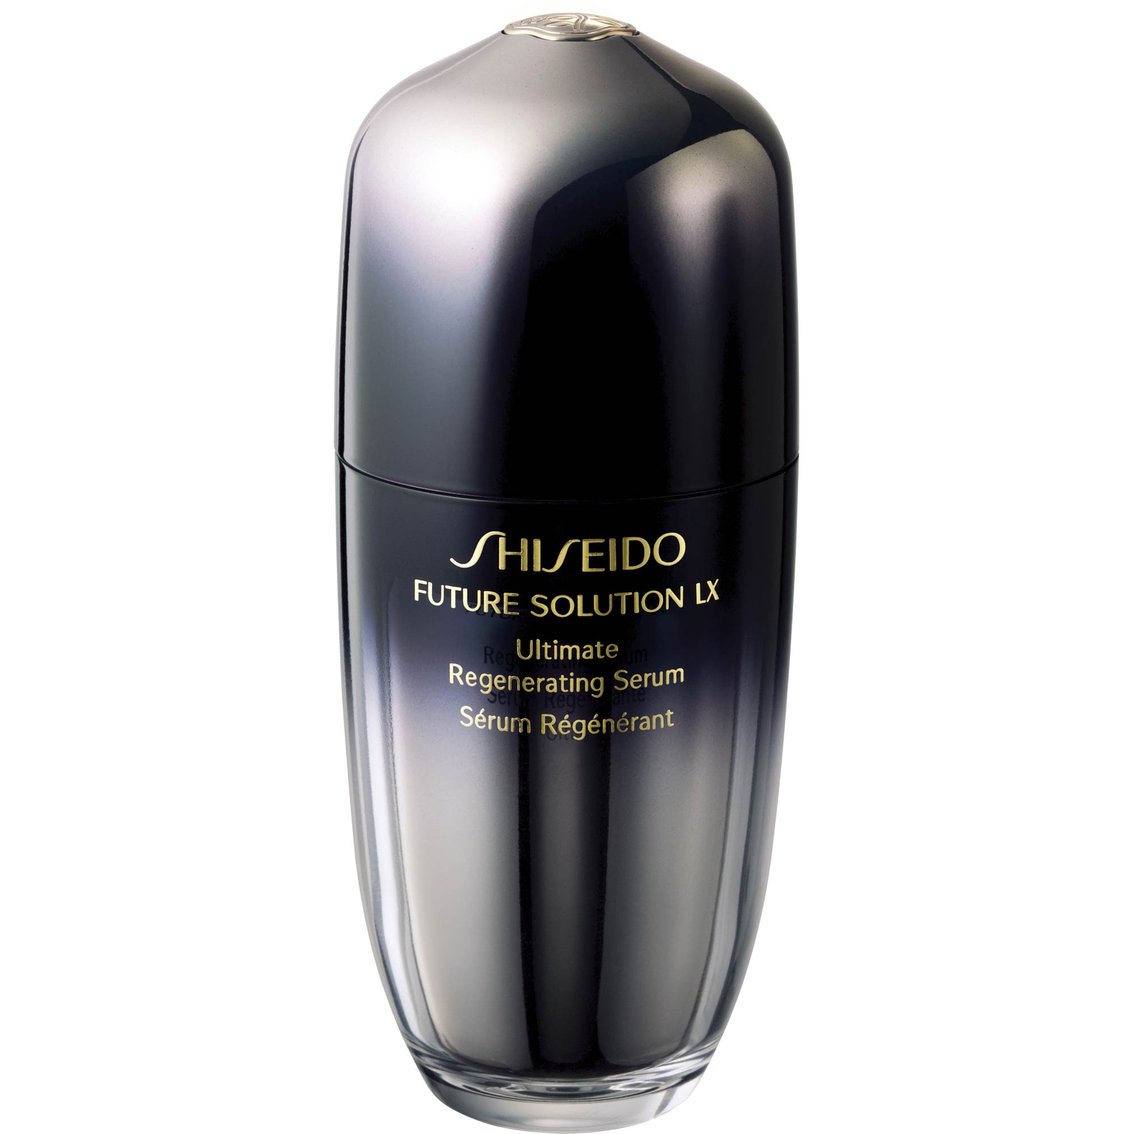 Shiseido serum. Сыворотка Shiseido Future solution LX Ultimate Regenerating 30 мл. Shiseido Future solution LX. Shiseido Future solution LX Intensive. Shiseido Ultimate.